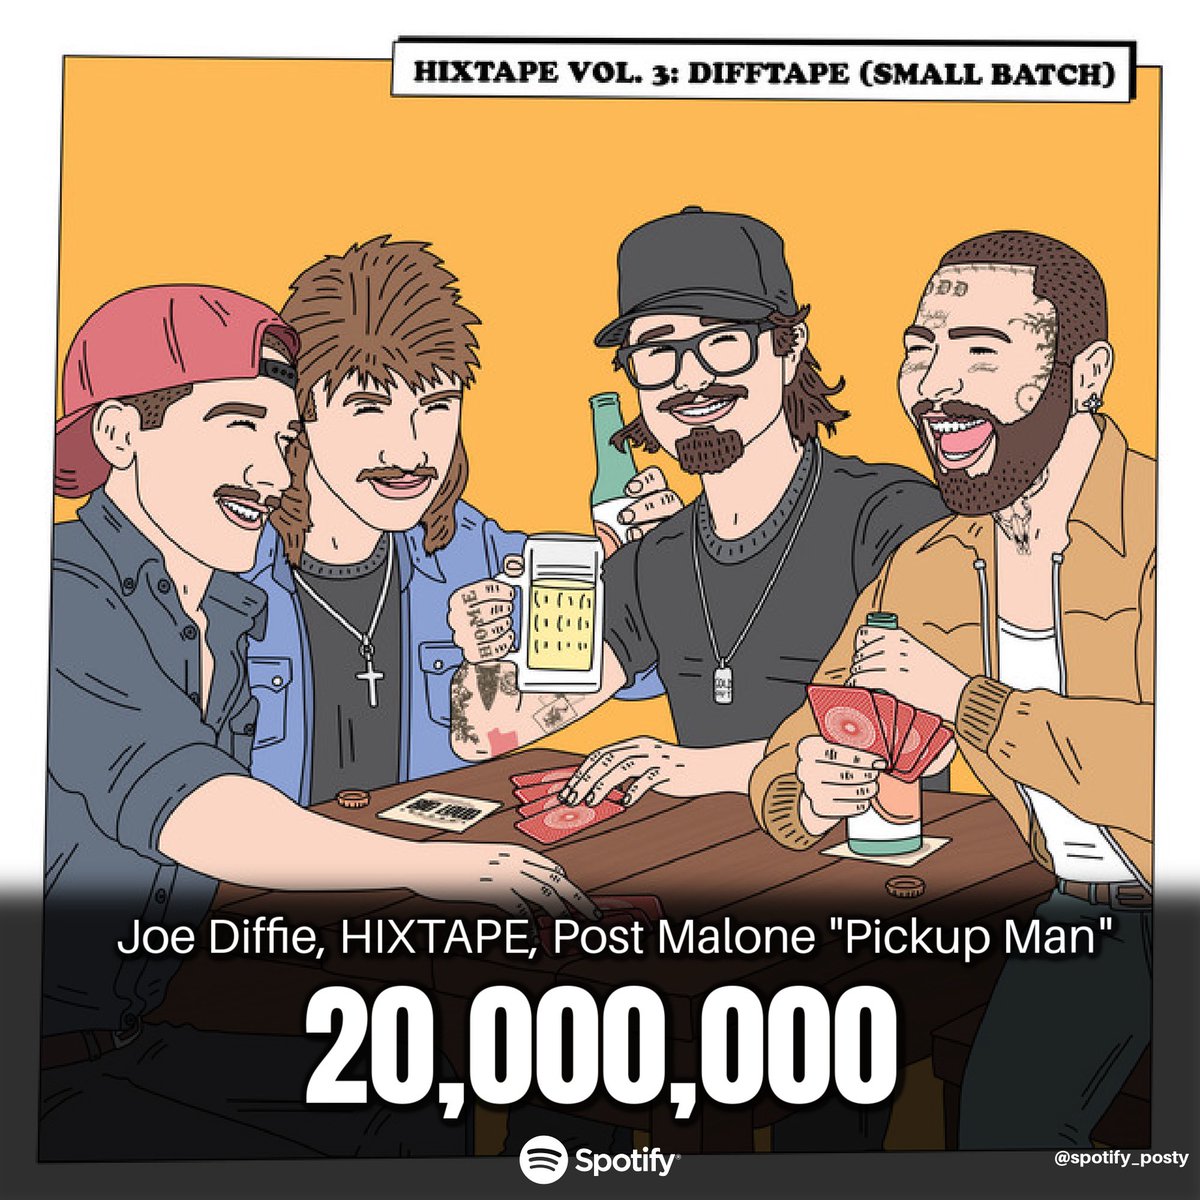 “Pickup Man” has surpassed 20 million streams on Spotify